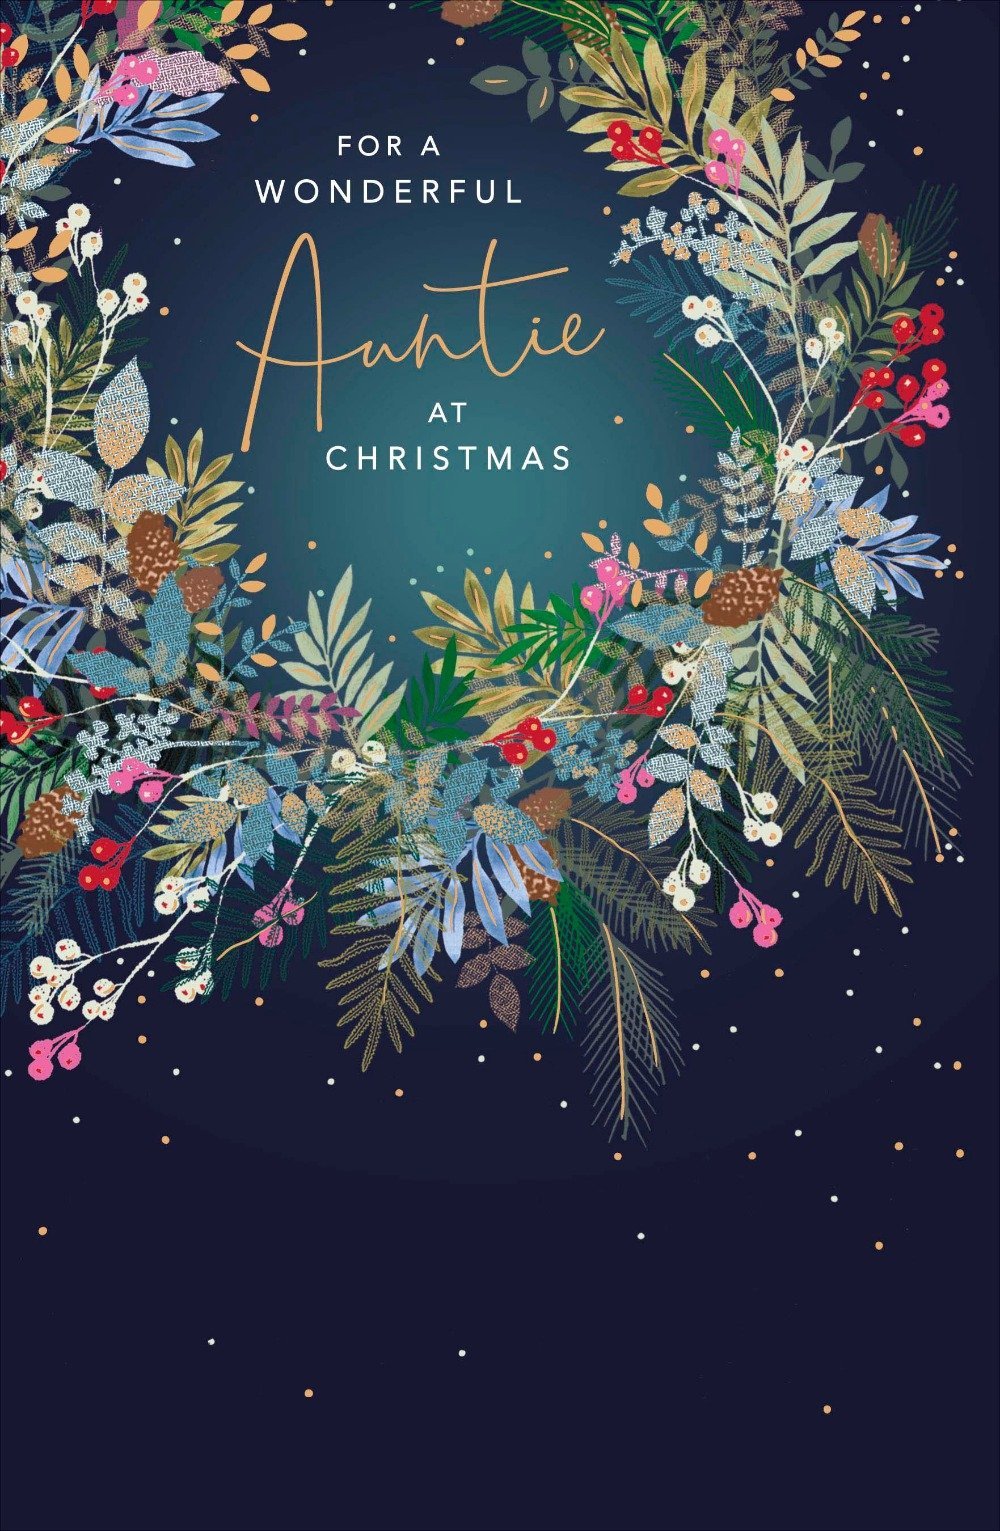 Auntie Christmas Card